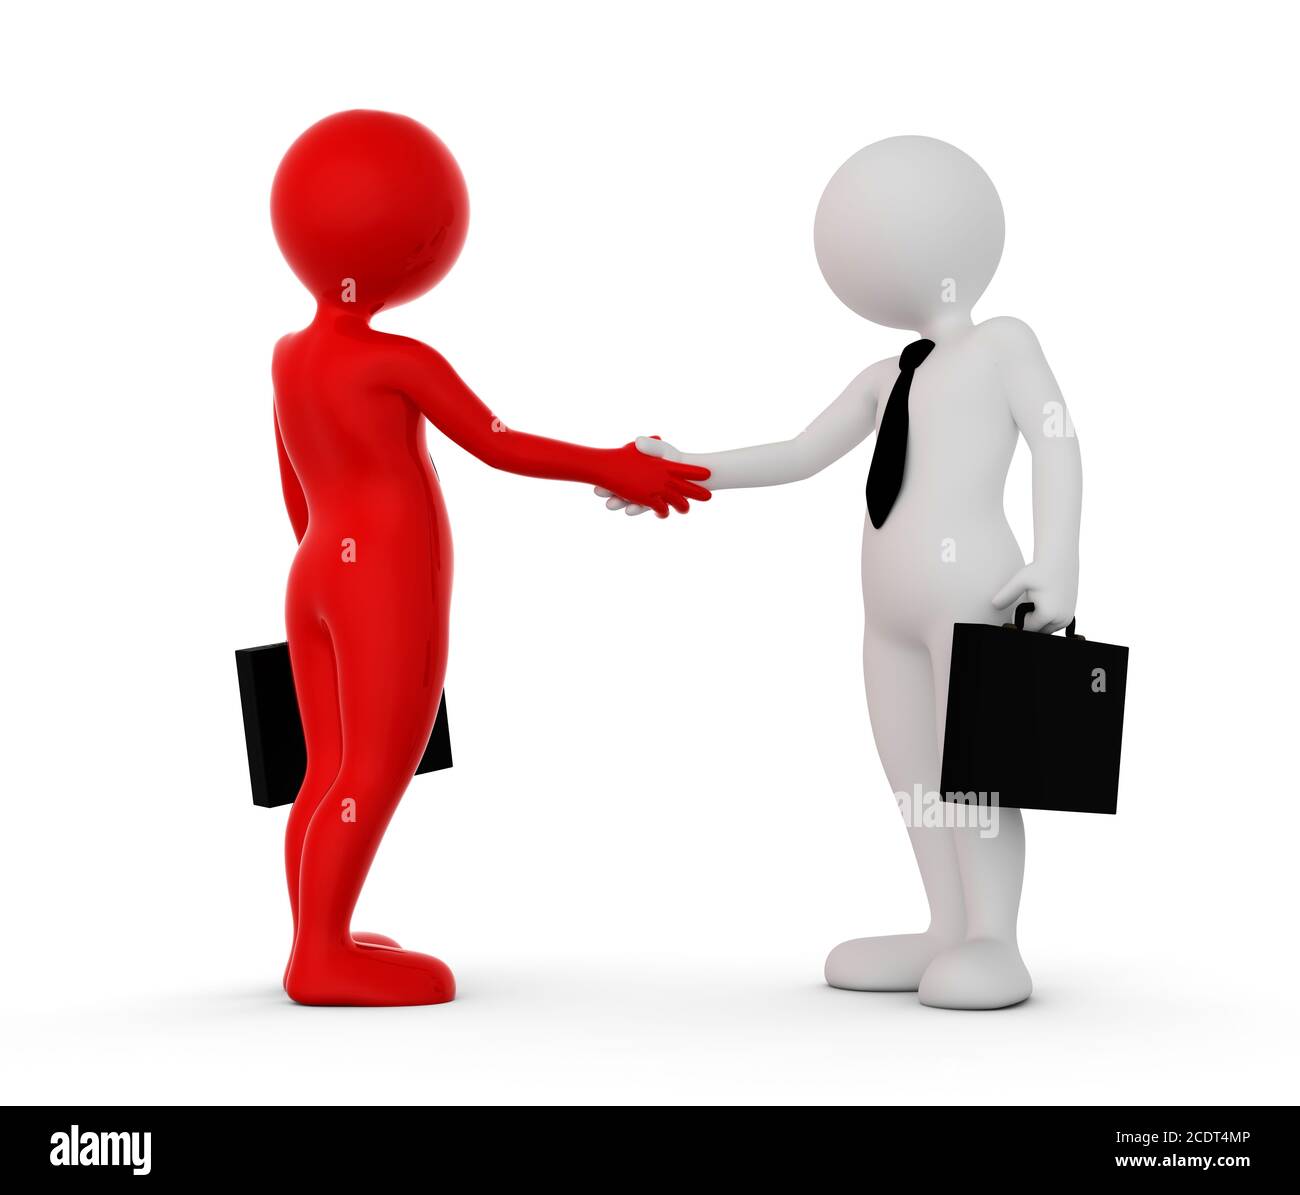 Business handshake. Ton man shaking hands. Deal, agreement, partner concept Stock Photo